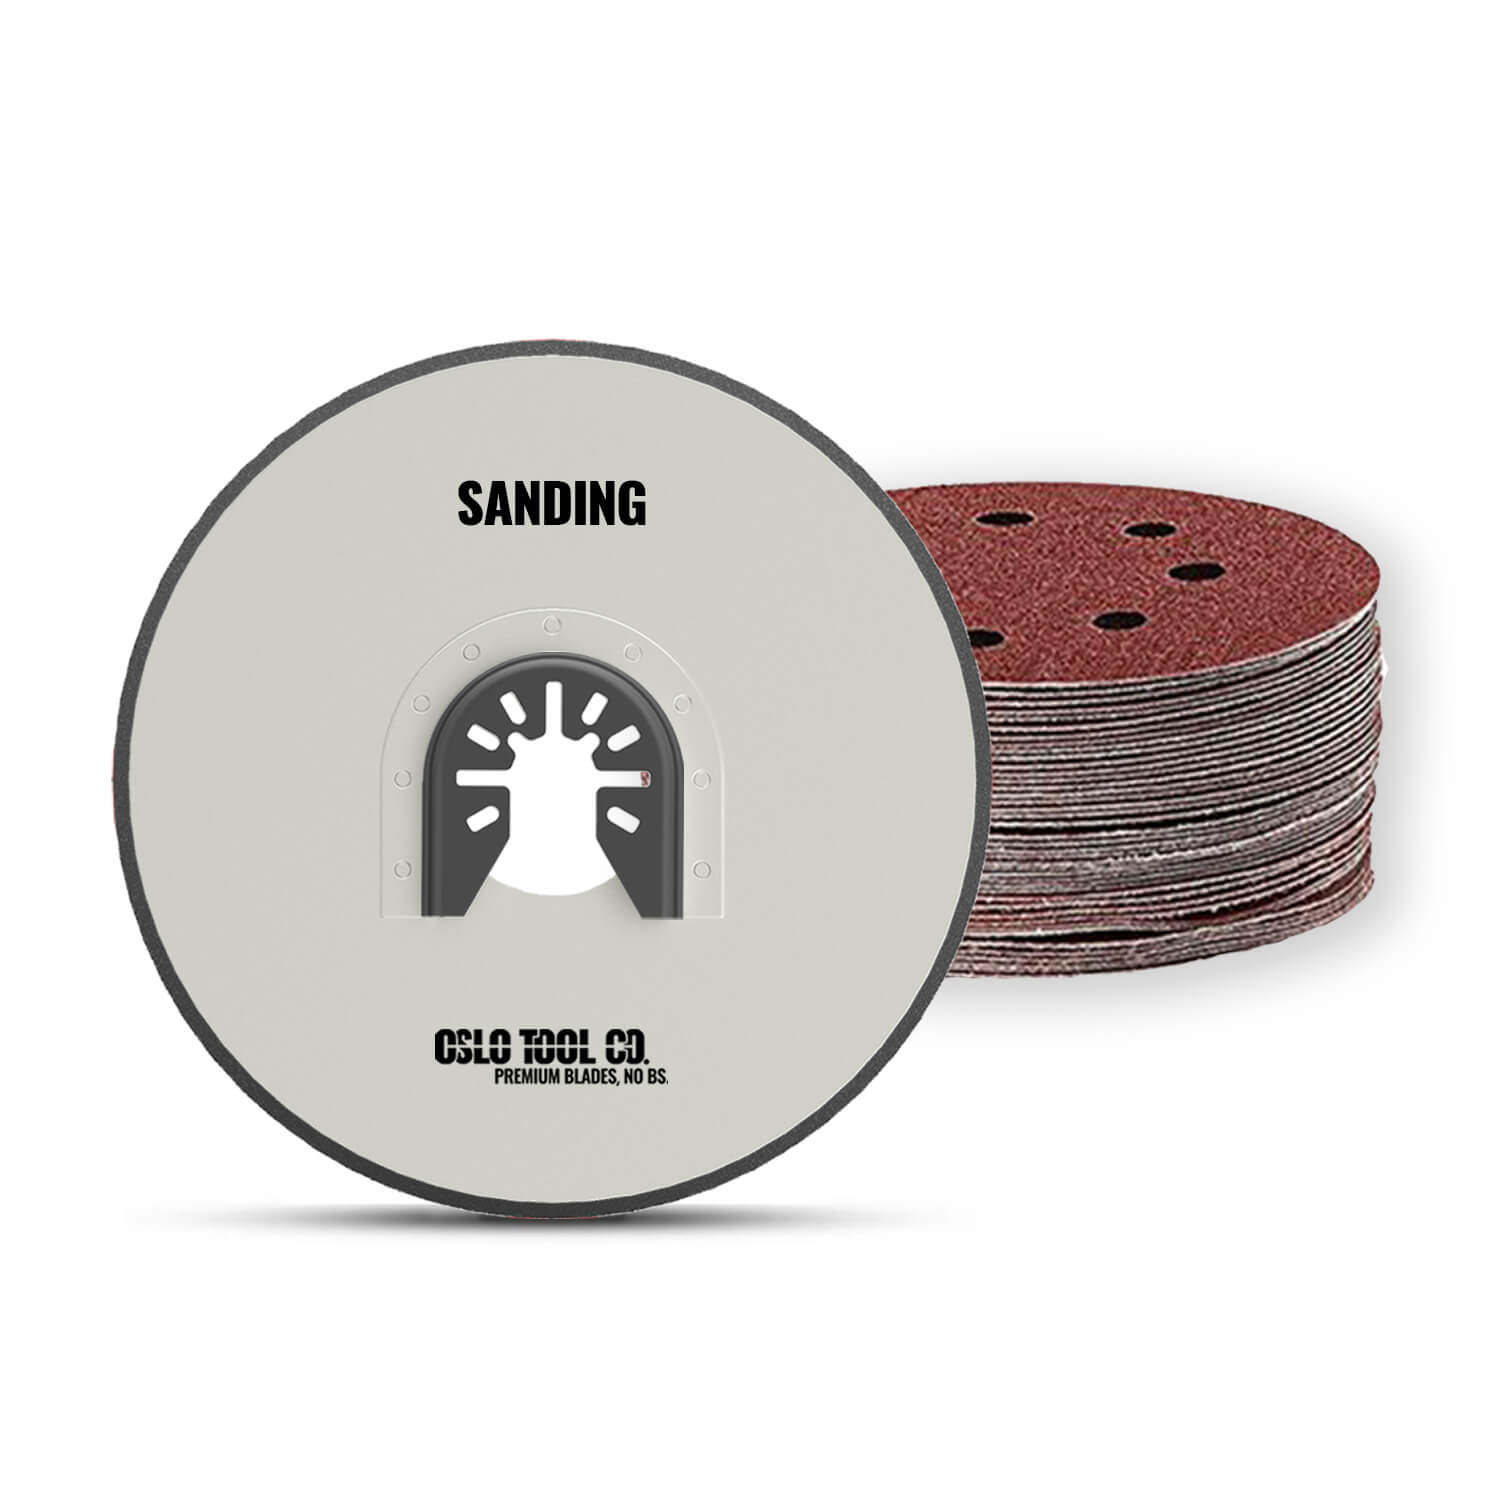 Slippaket | 25 sandpapper | Cirkelform | Multiverktyg